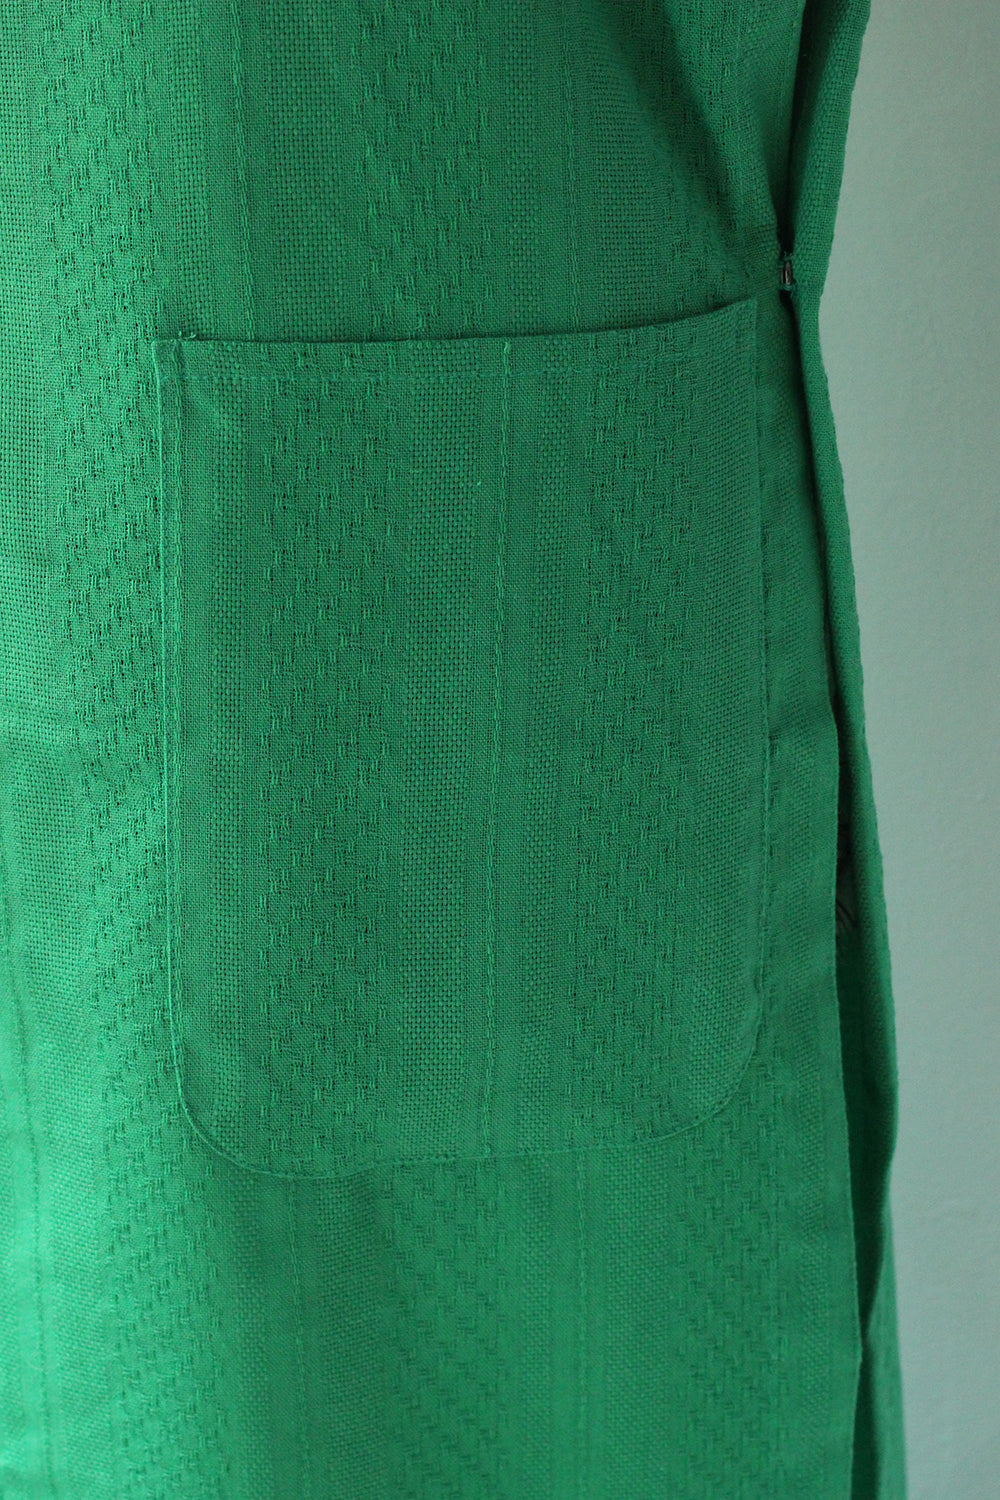 charrita "vestido mandil" (green)